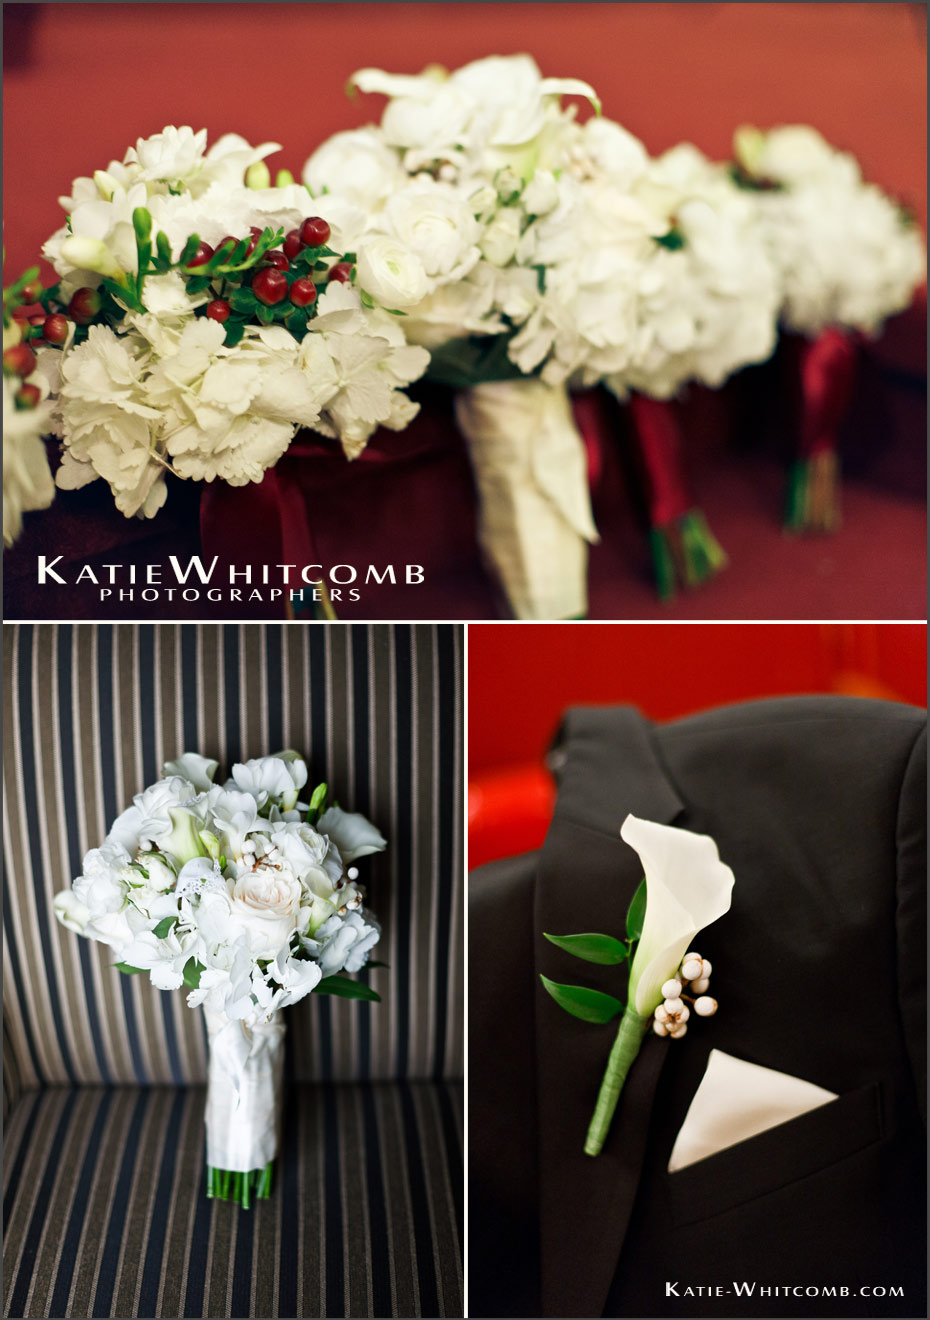 Katie-Whitcomb-Photographers_carolyns-florist